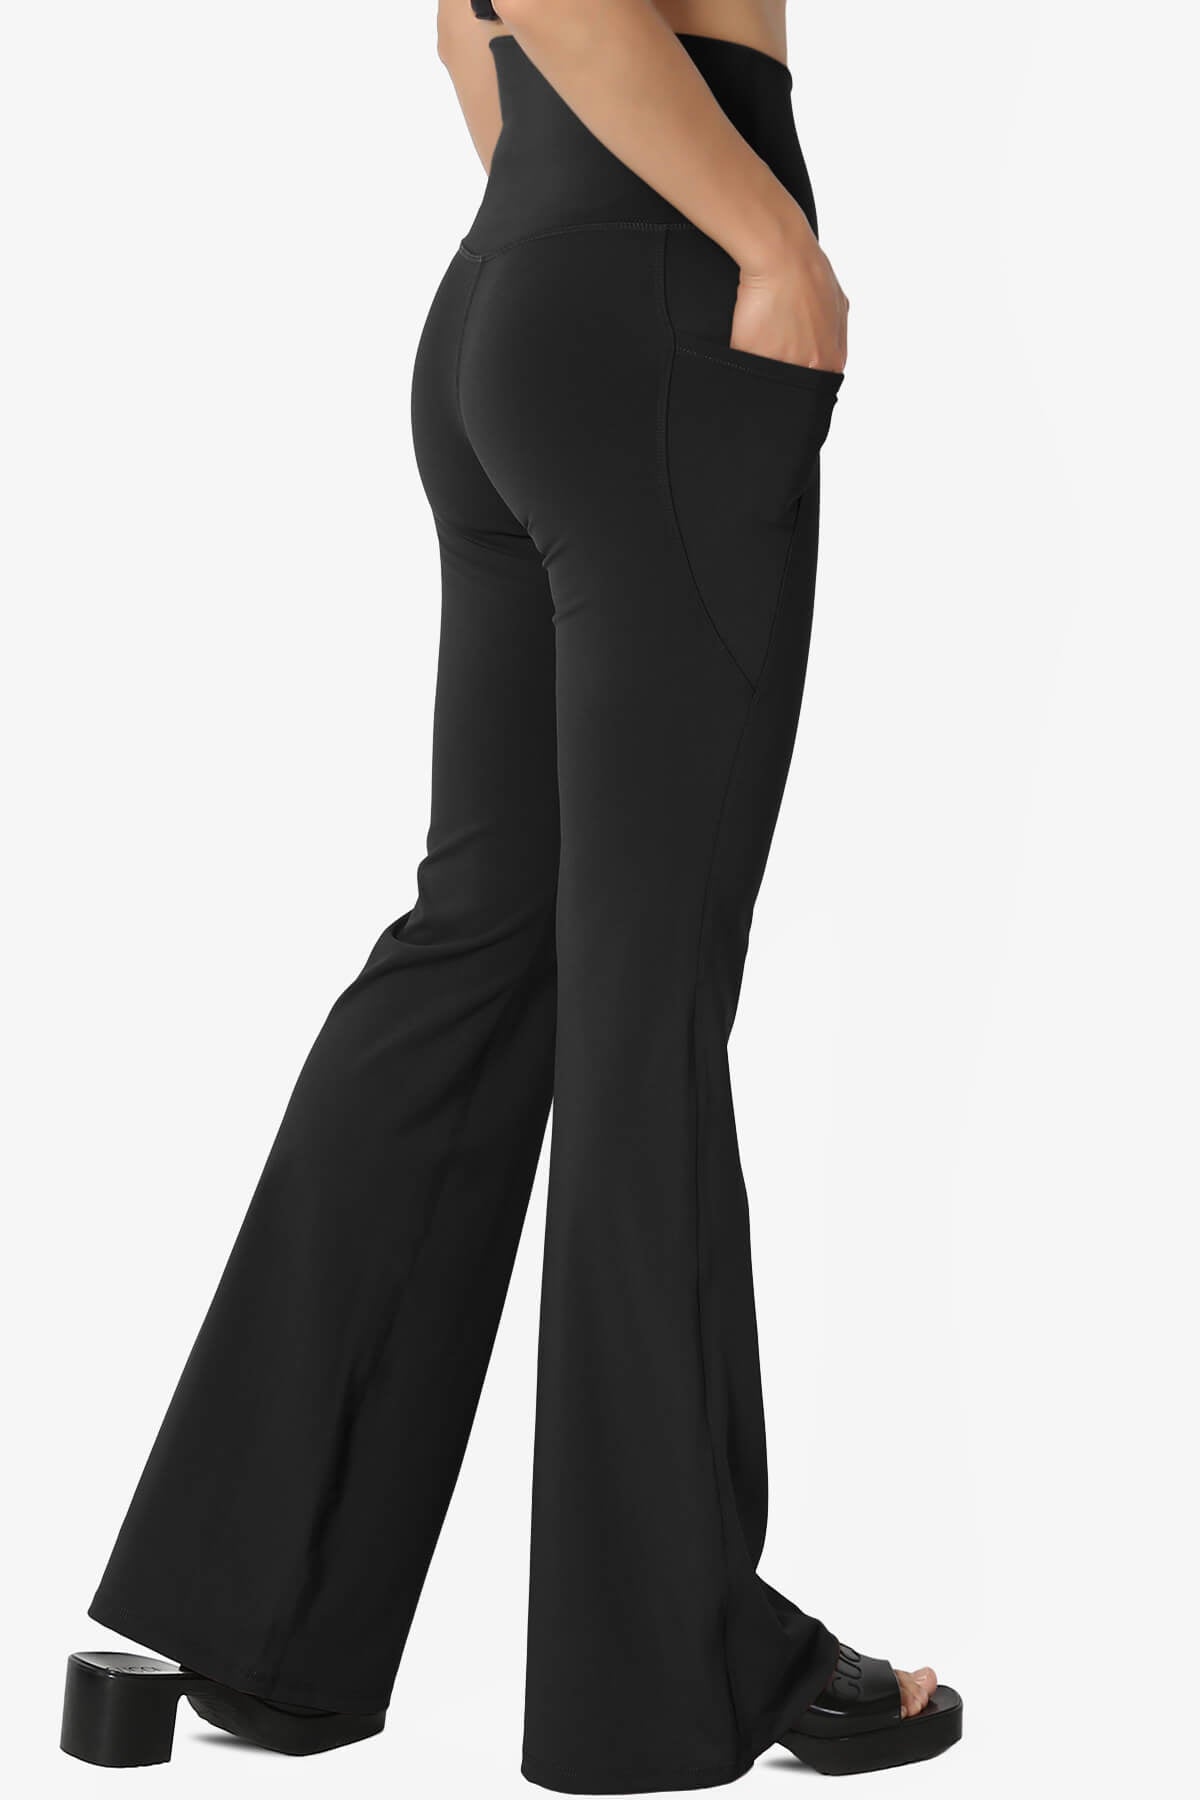 Gemma Athletic Pocket Flare Yoga Pants BLACK_4